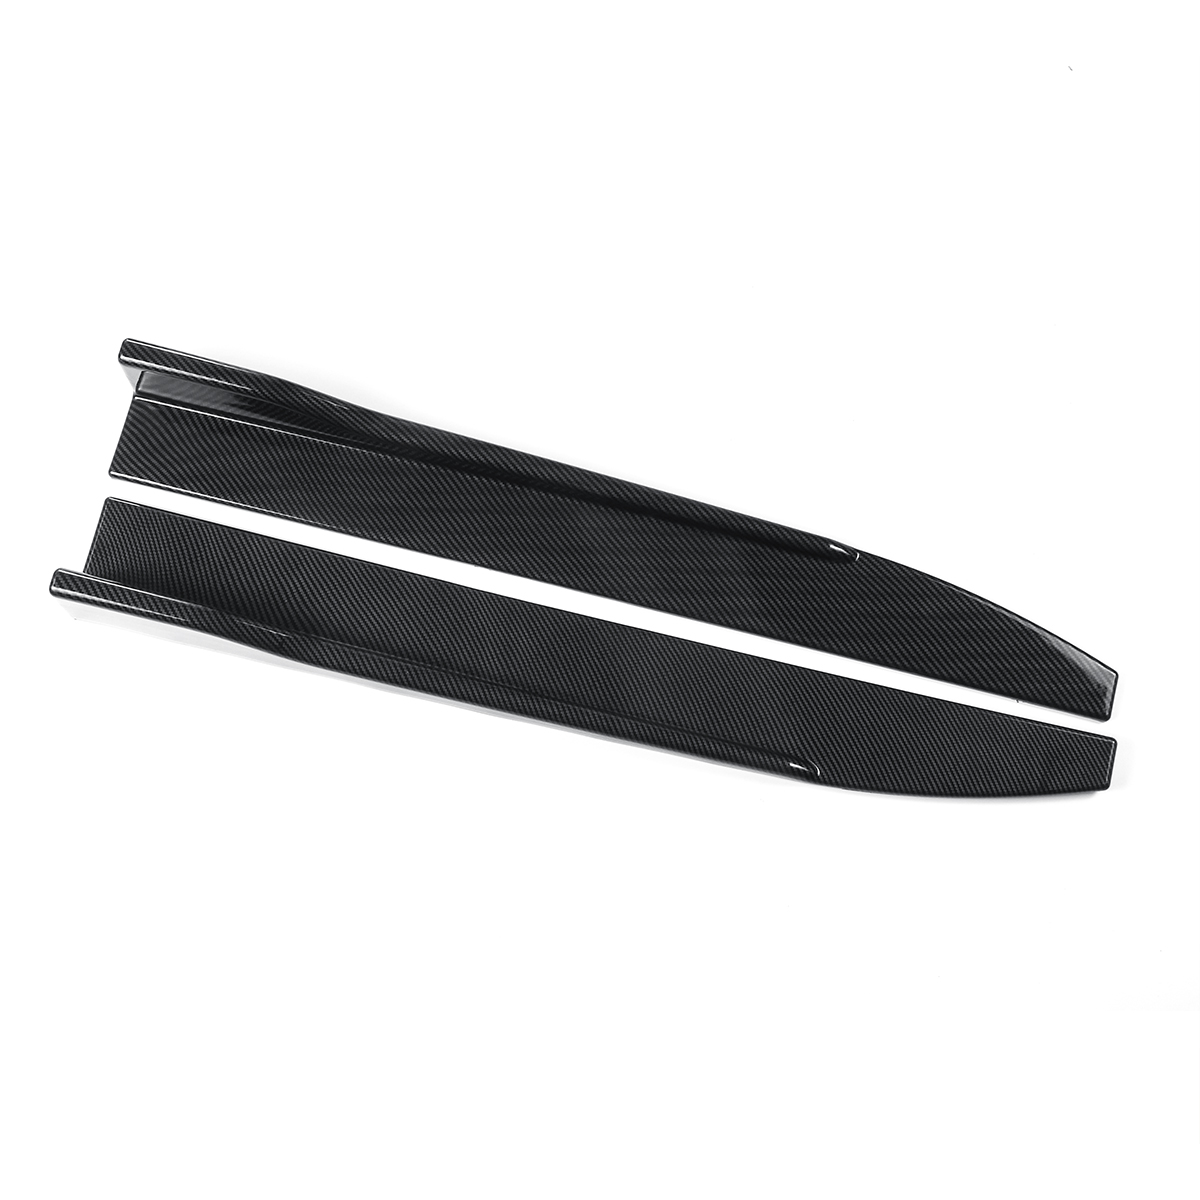 2 X Universal Gloss Black or Carbon Fiber Style Car Side Skirt Rocker Splitters Canard Diffuser Winglet Wings